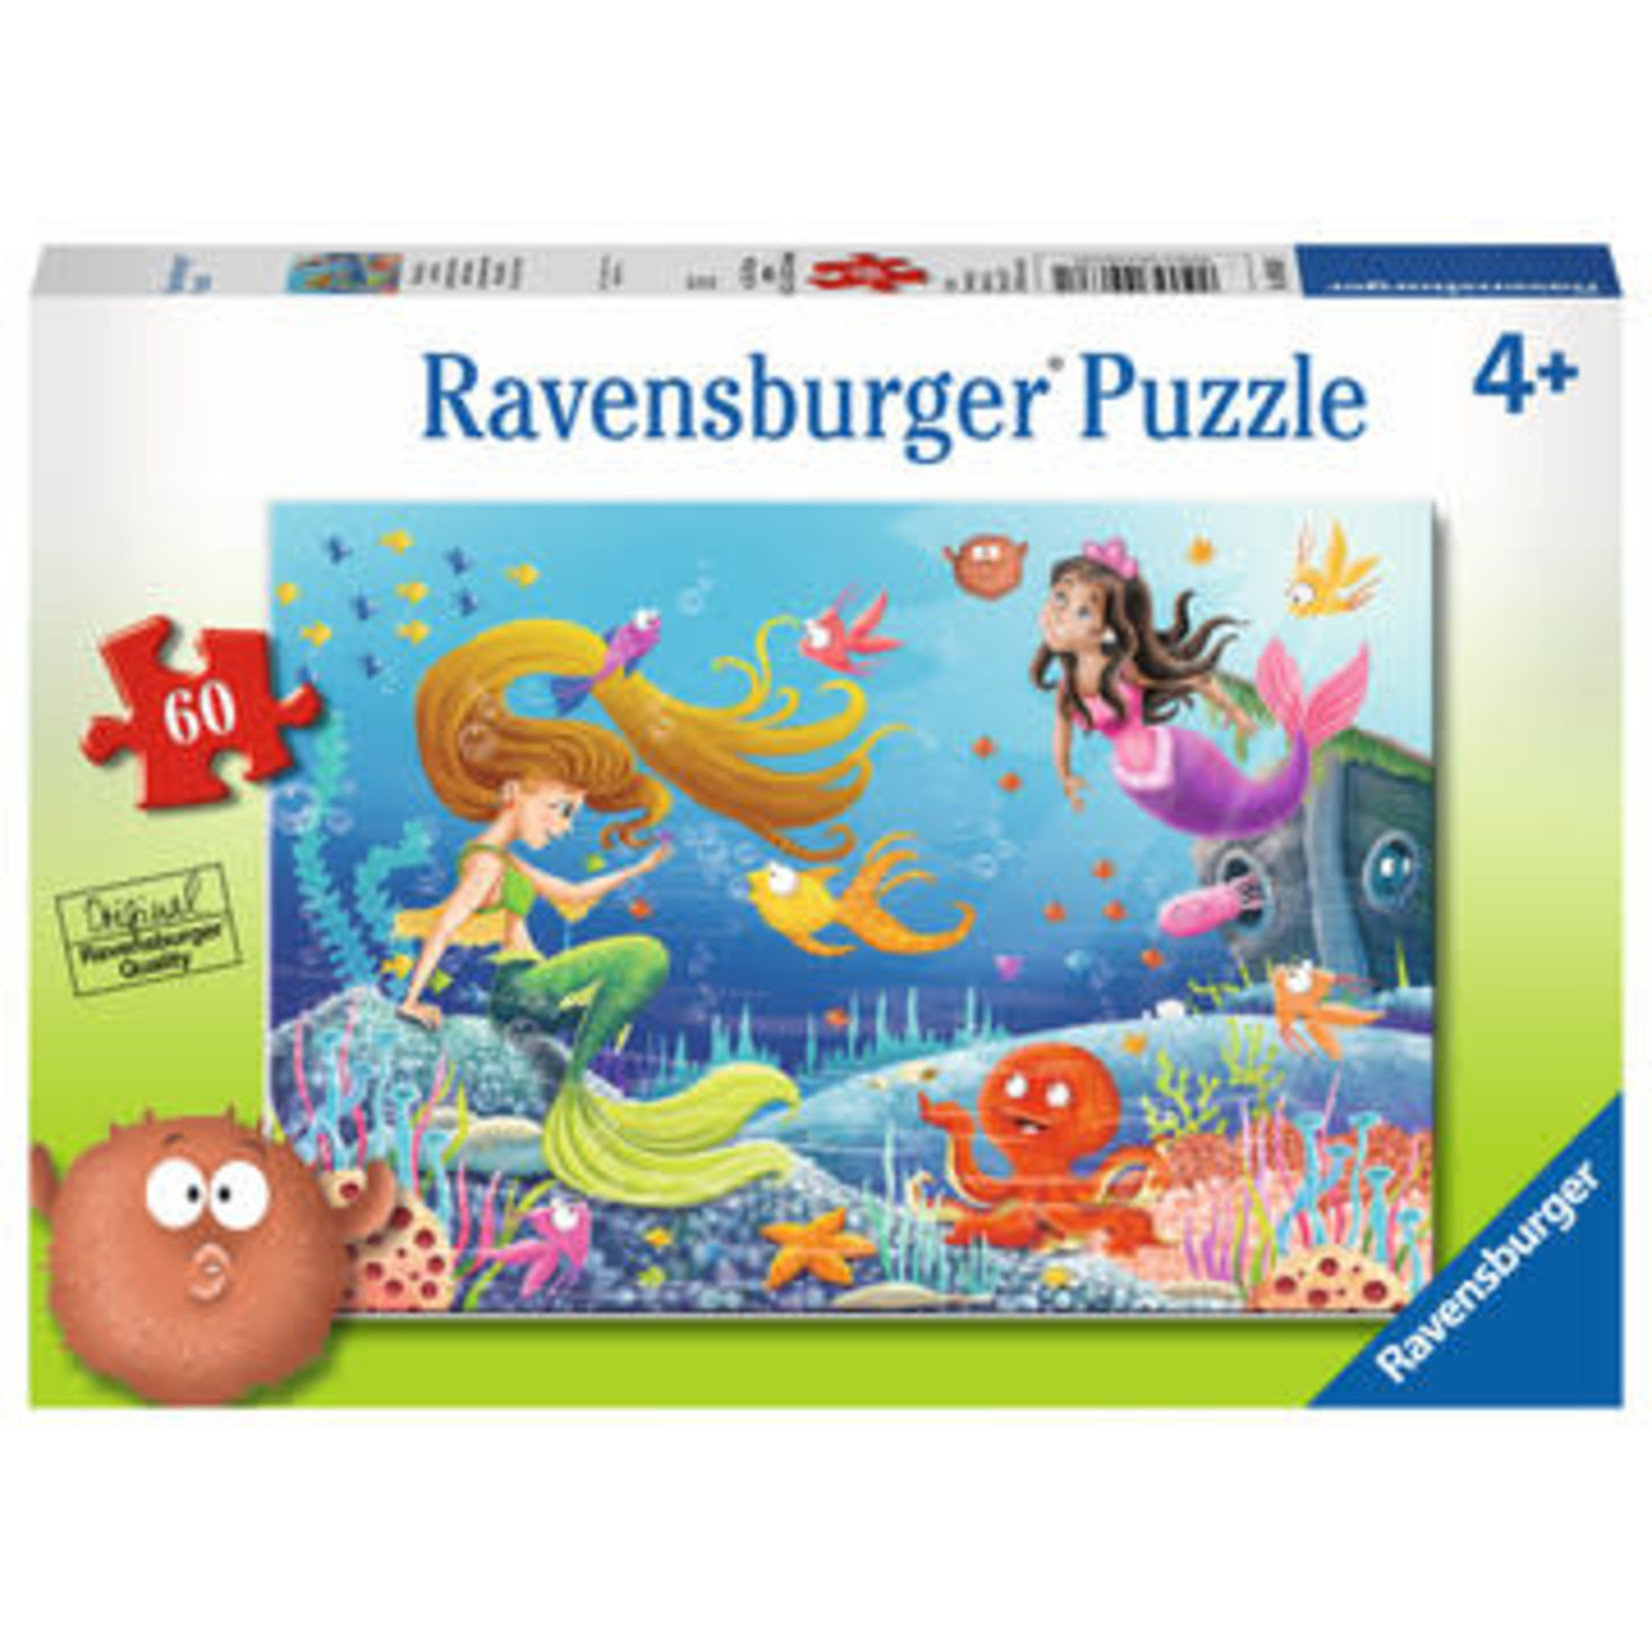 Ravensburger Mermaid Tales, 60-Piece Jigsaw Puzzle